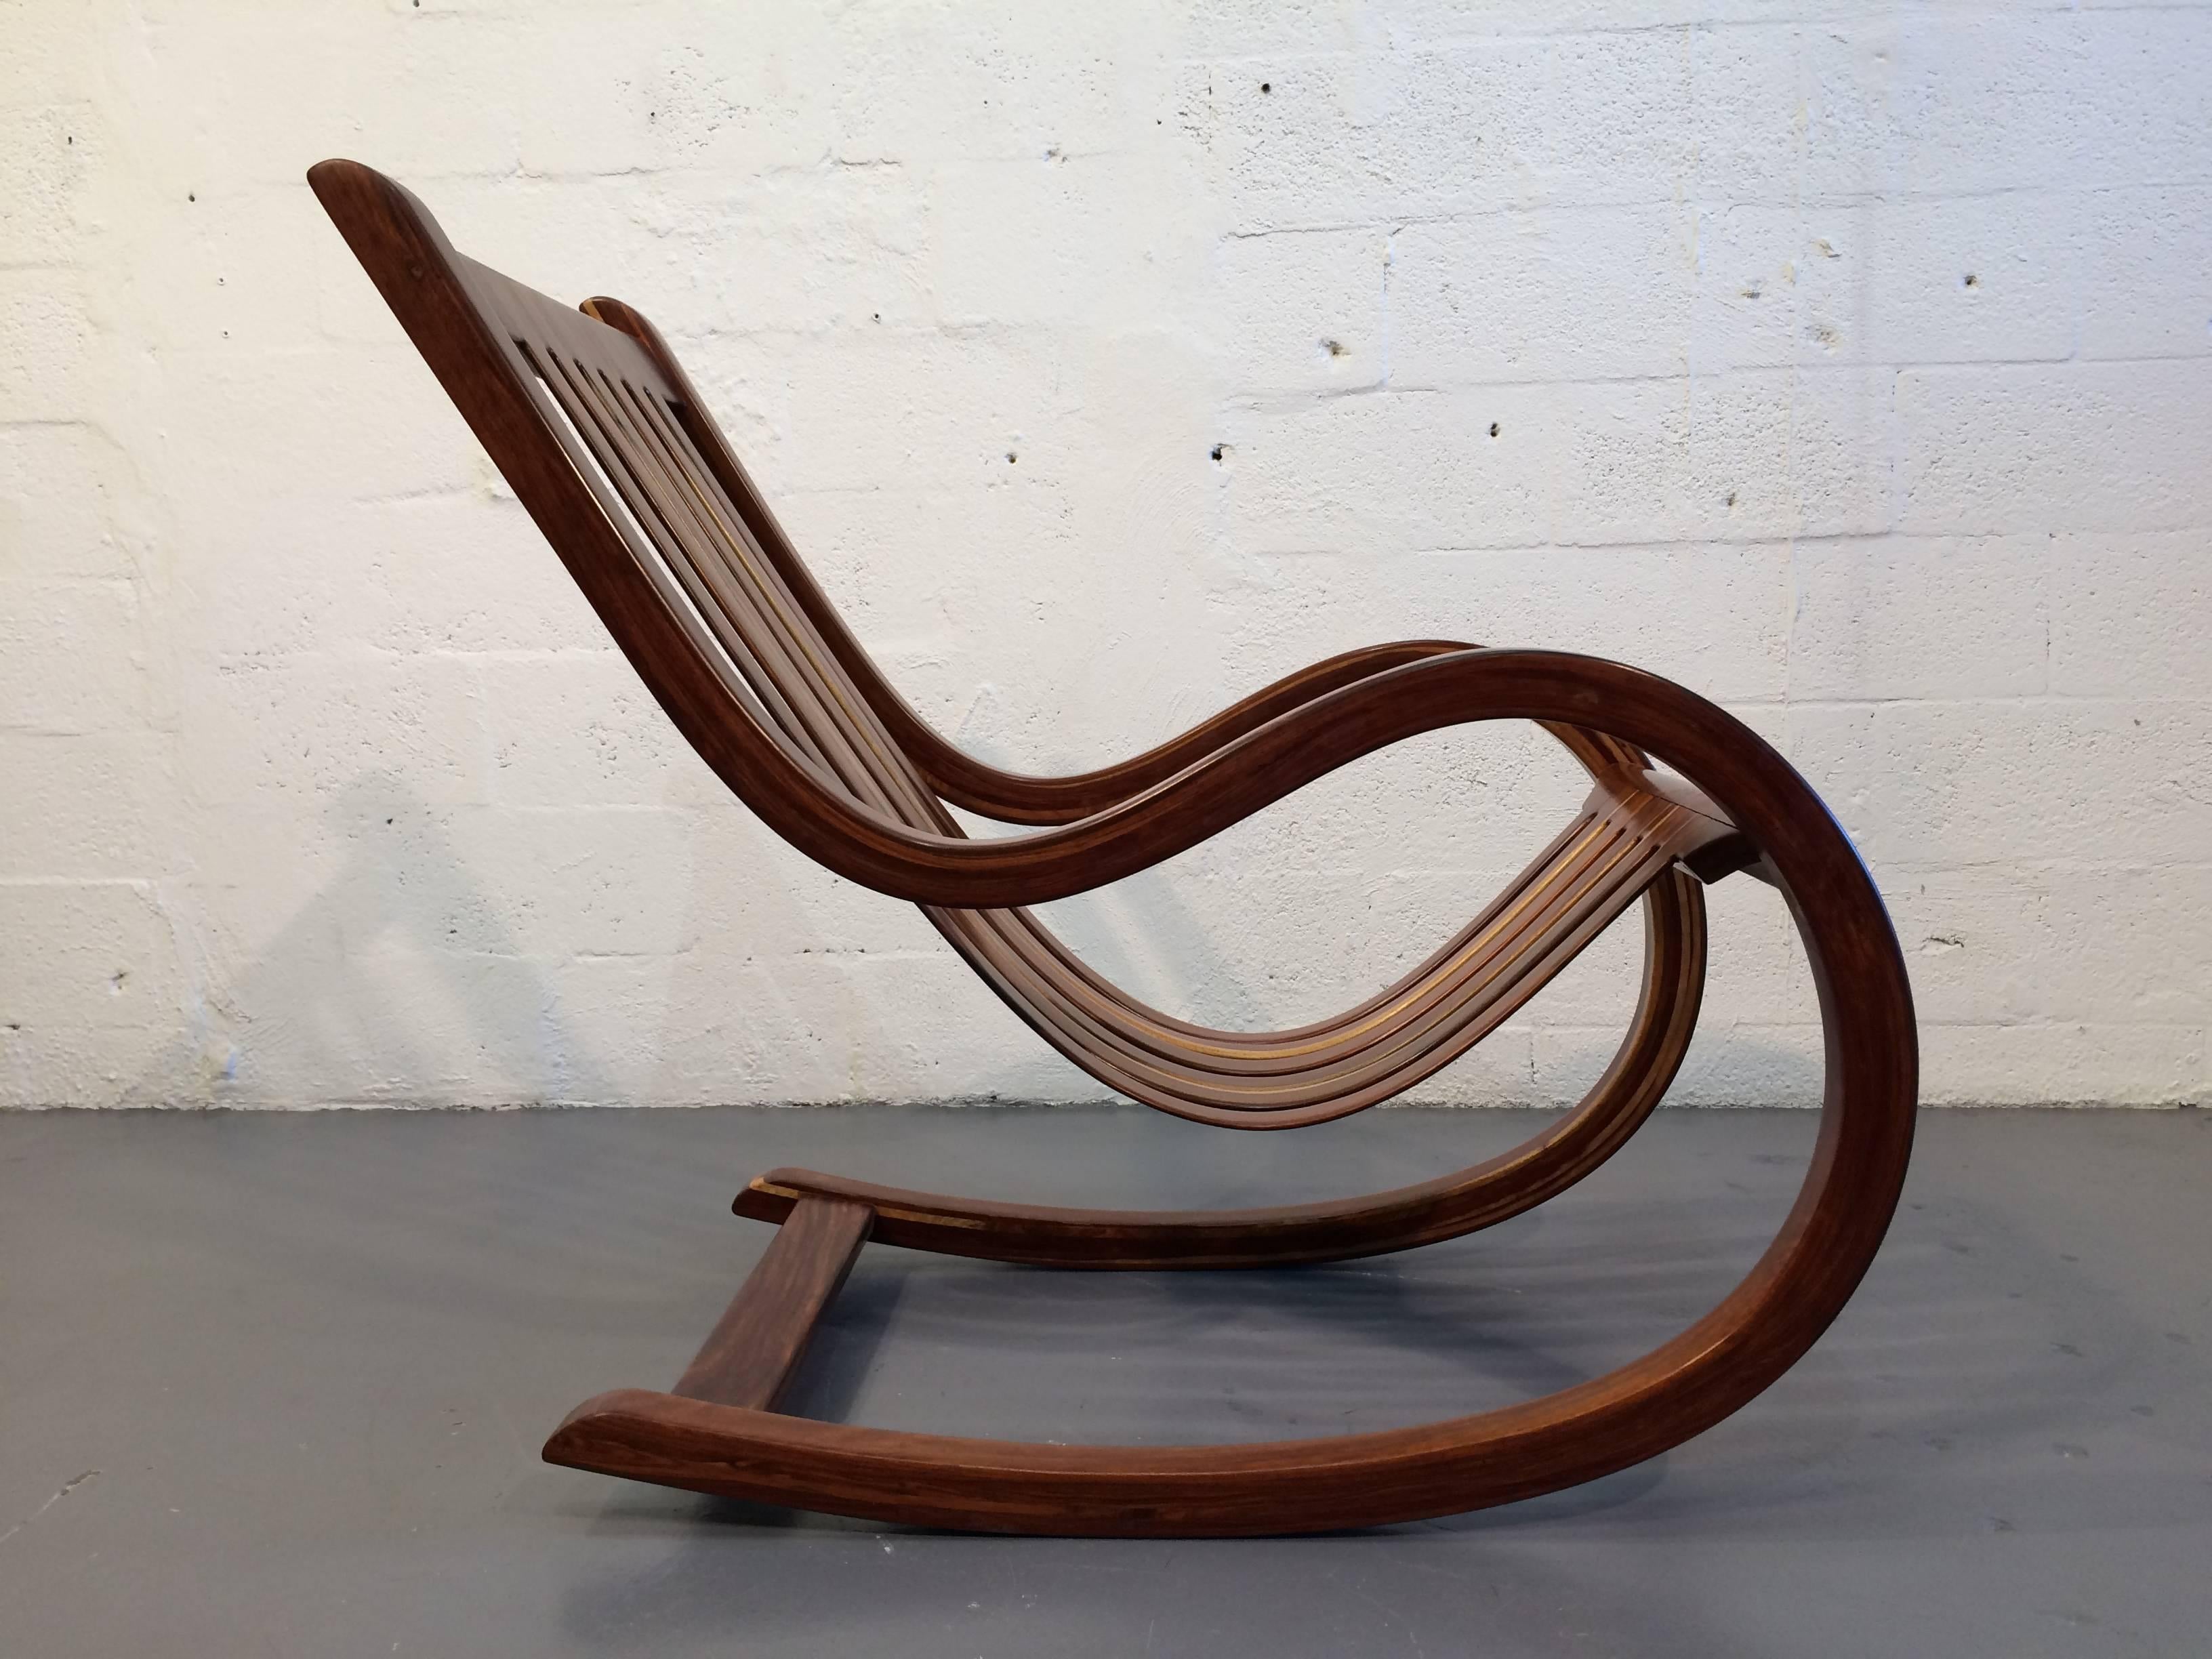 Studio crafted rocking chair rocker. Great design and craftsmanship.